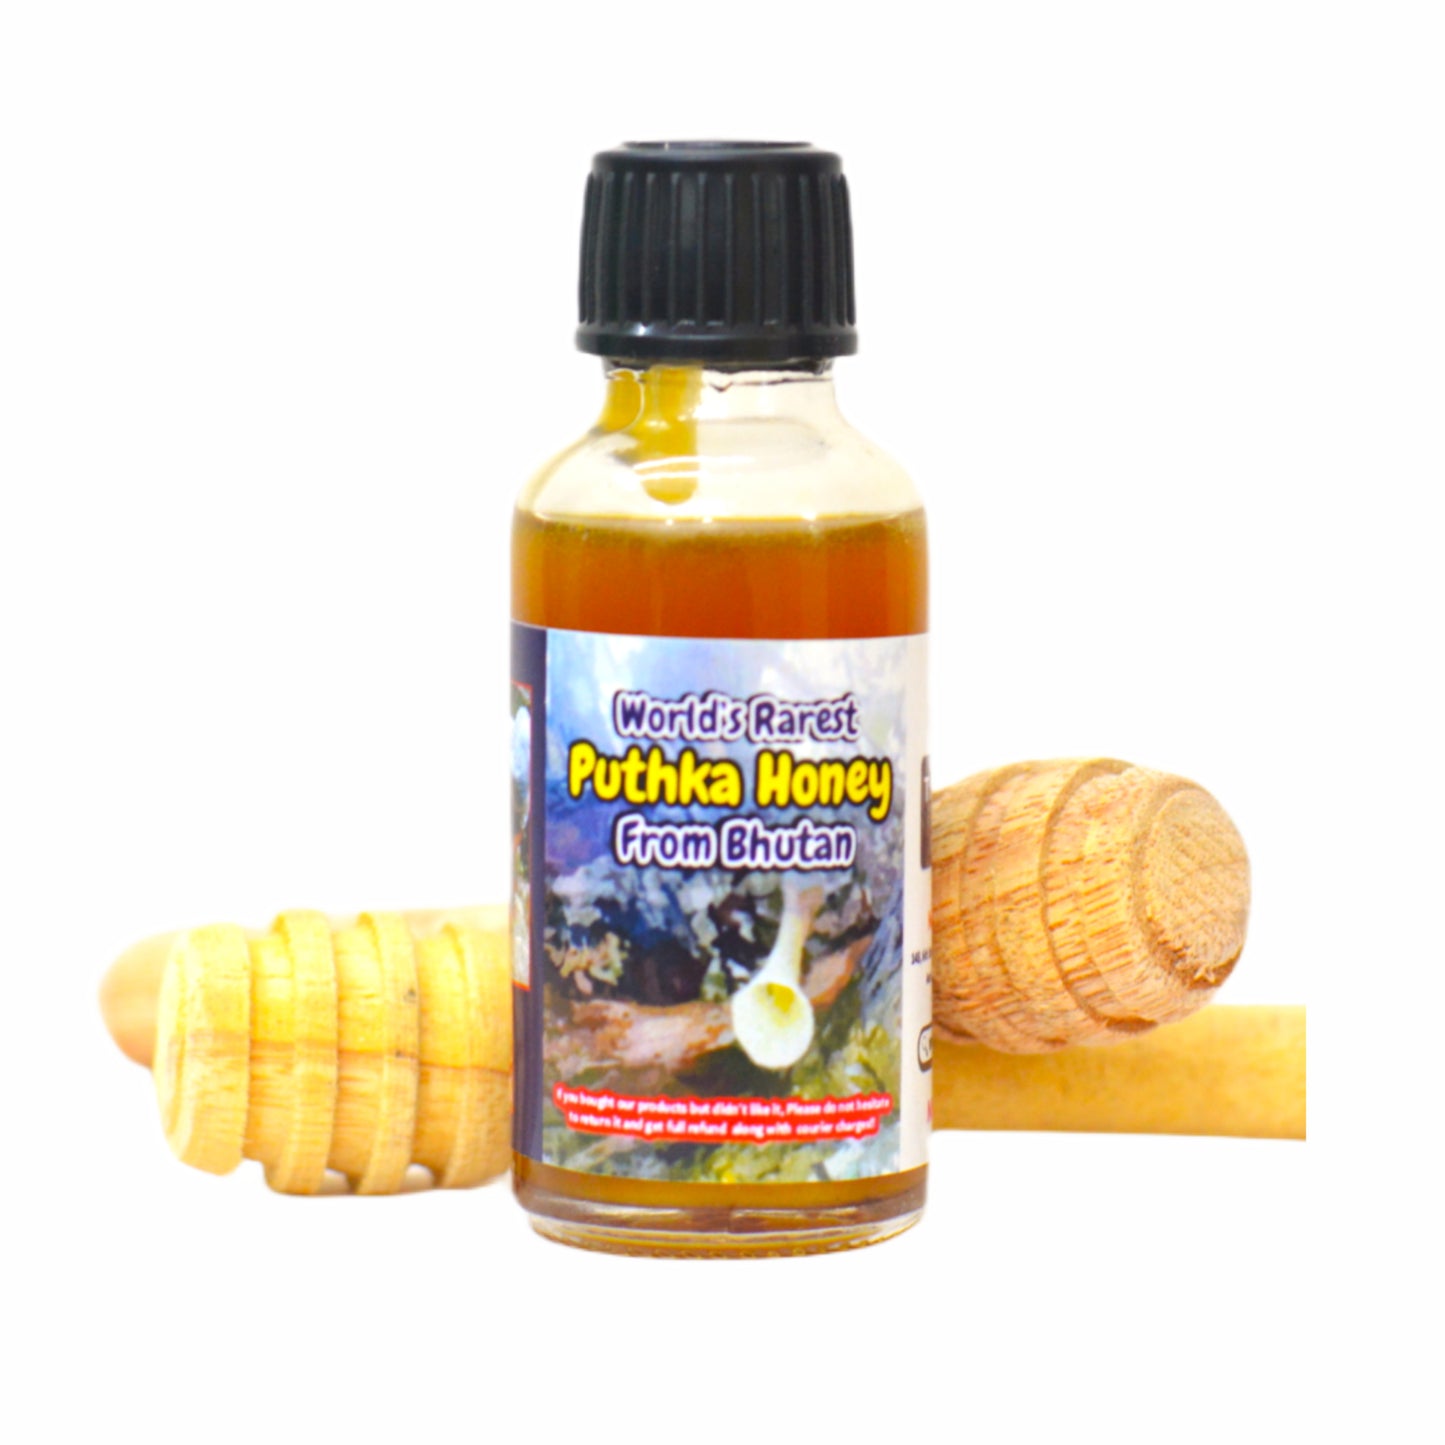 World's Rarest Puthka Honey From Bhutan - 40 Grams